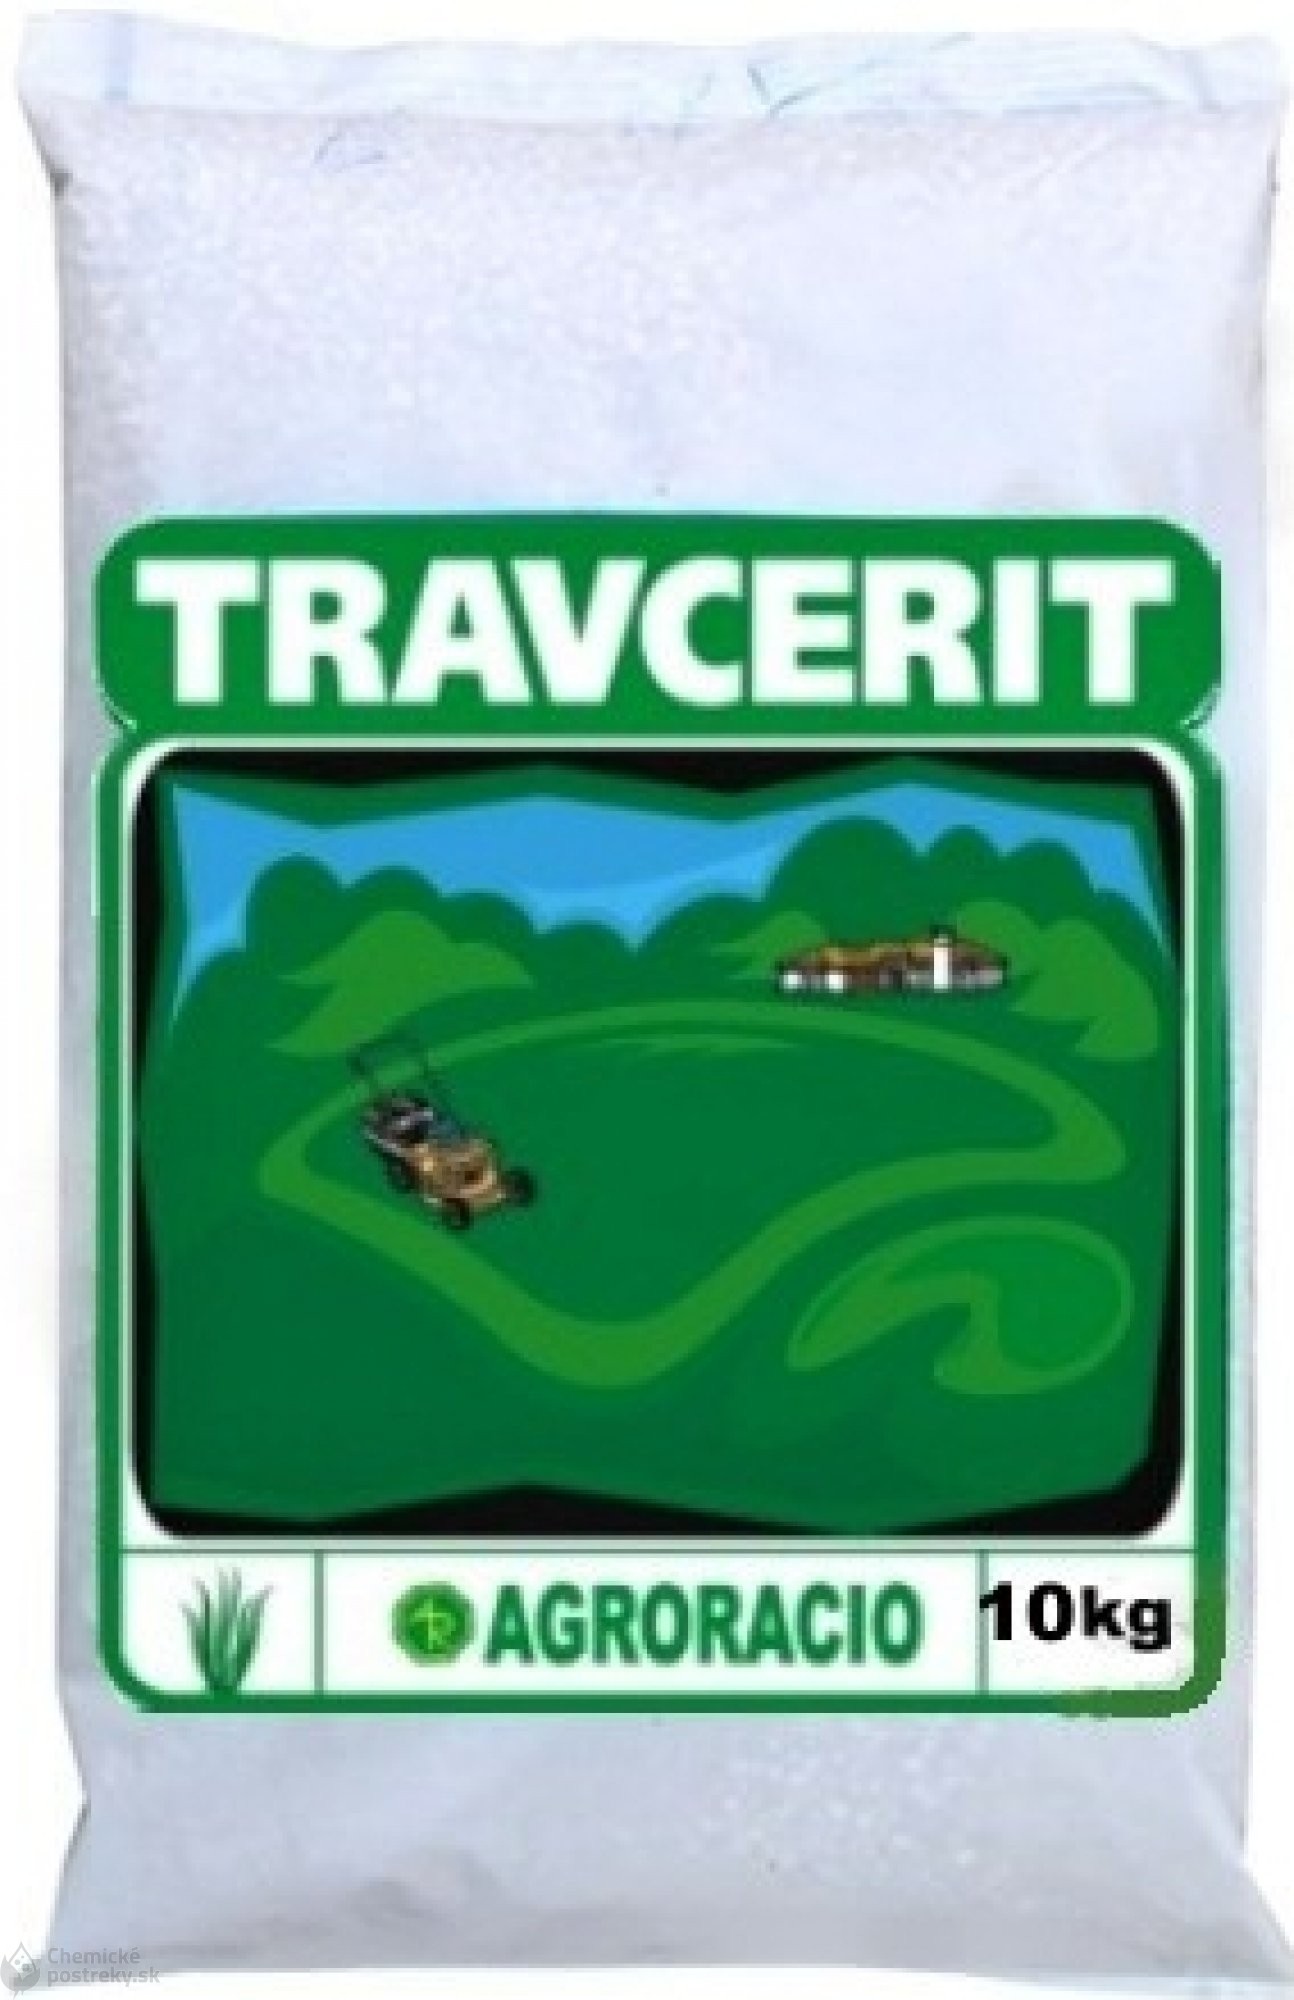 TRAVCERIT-25 kg